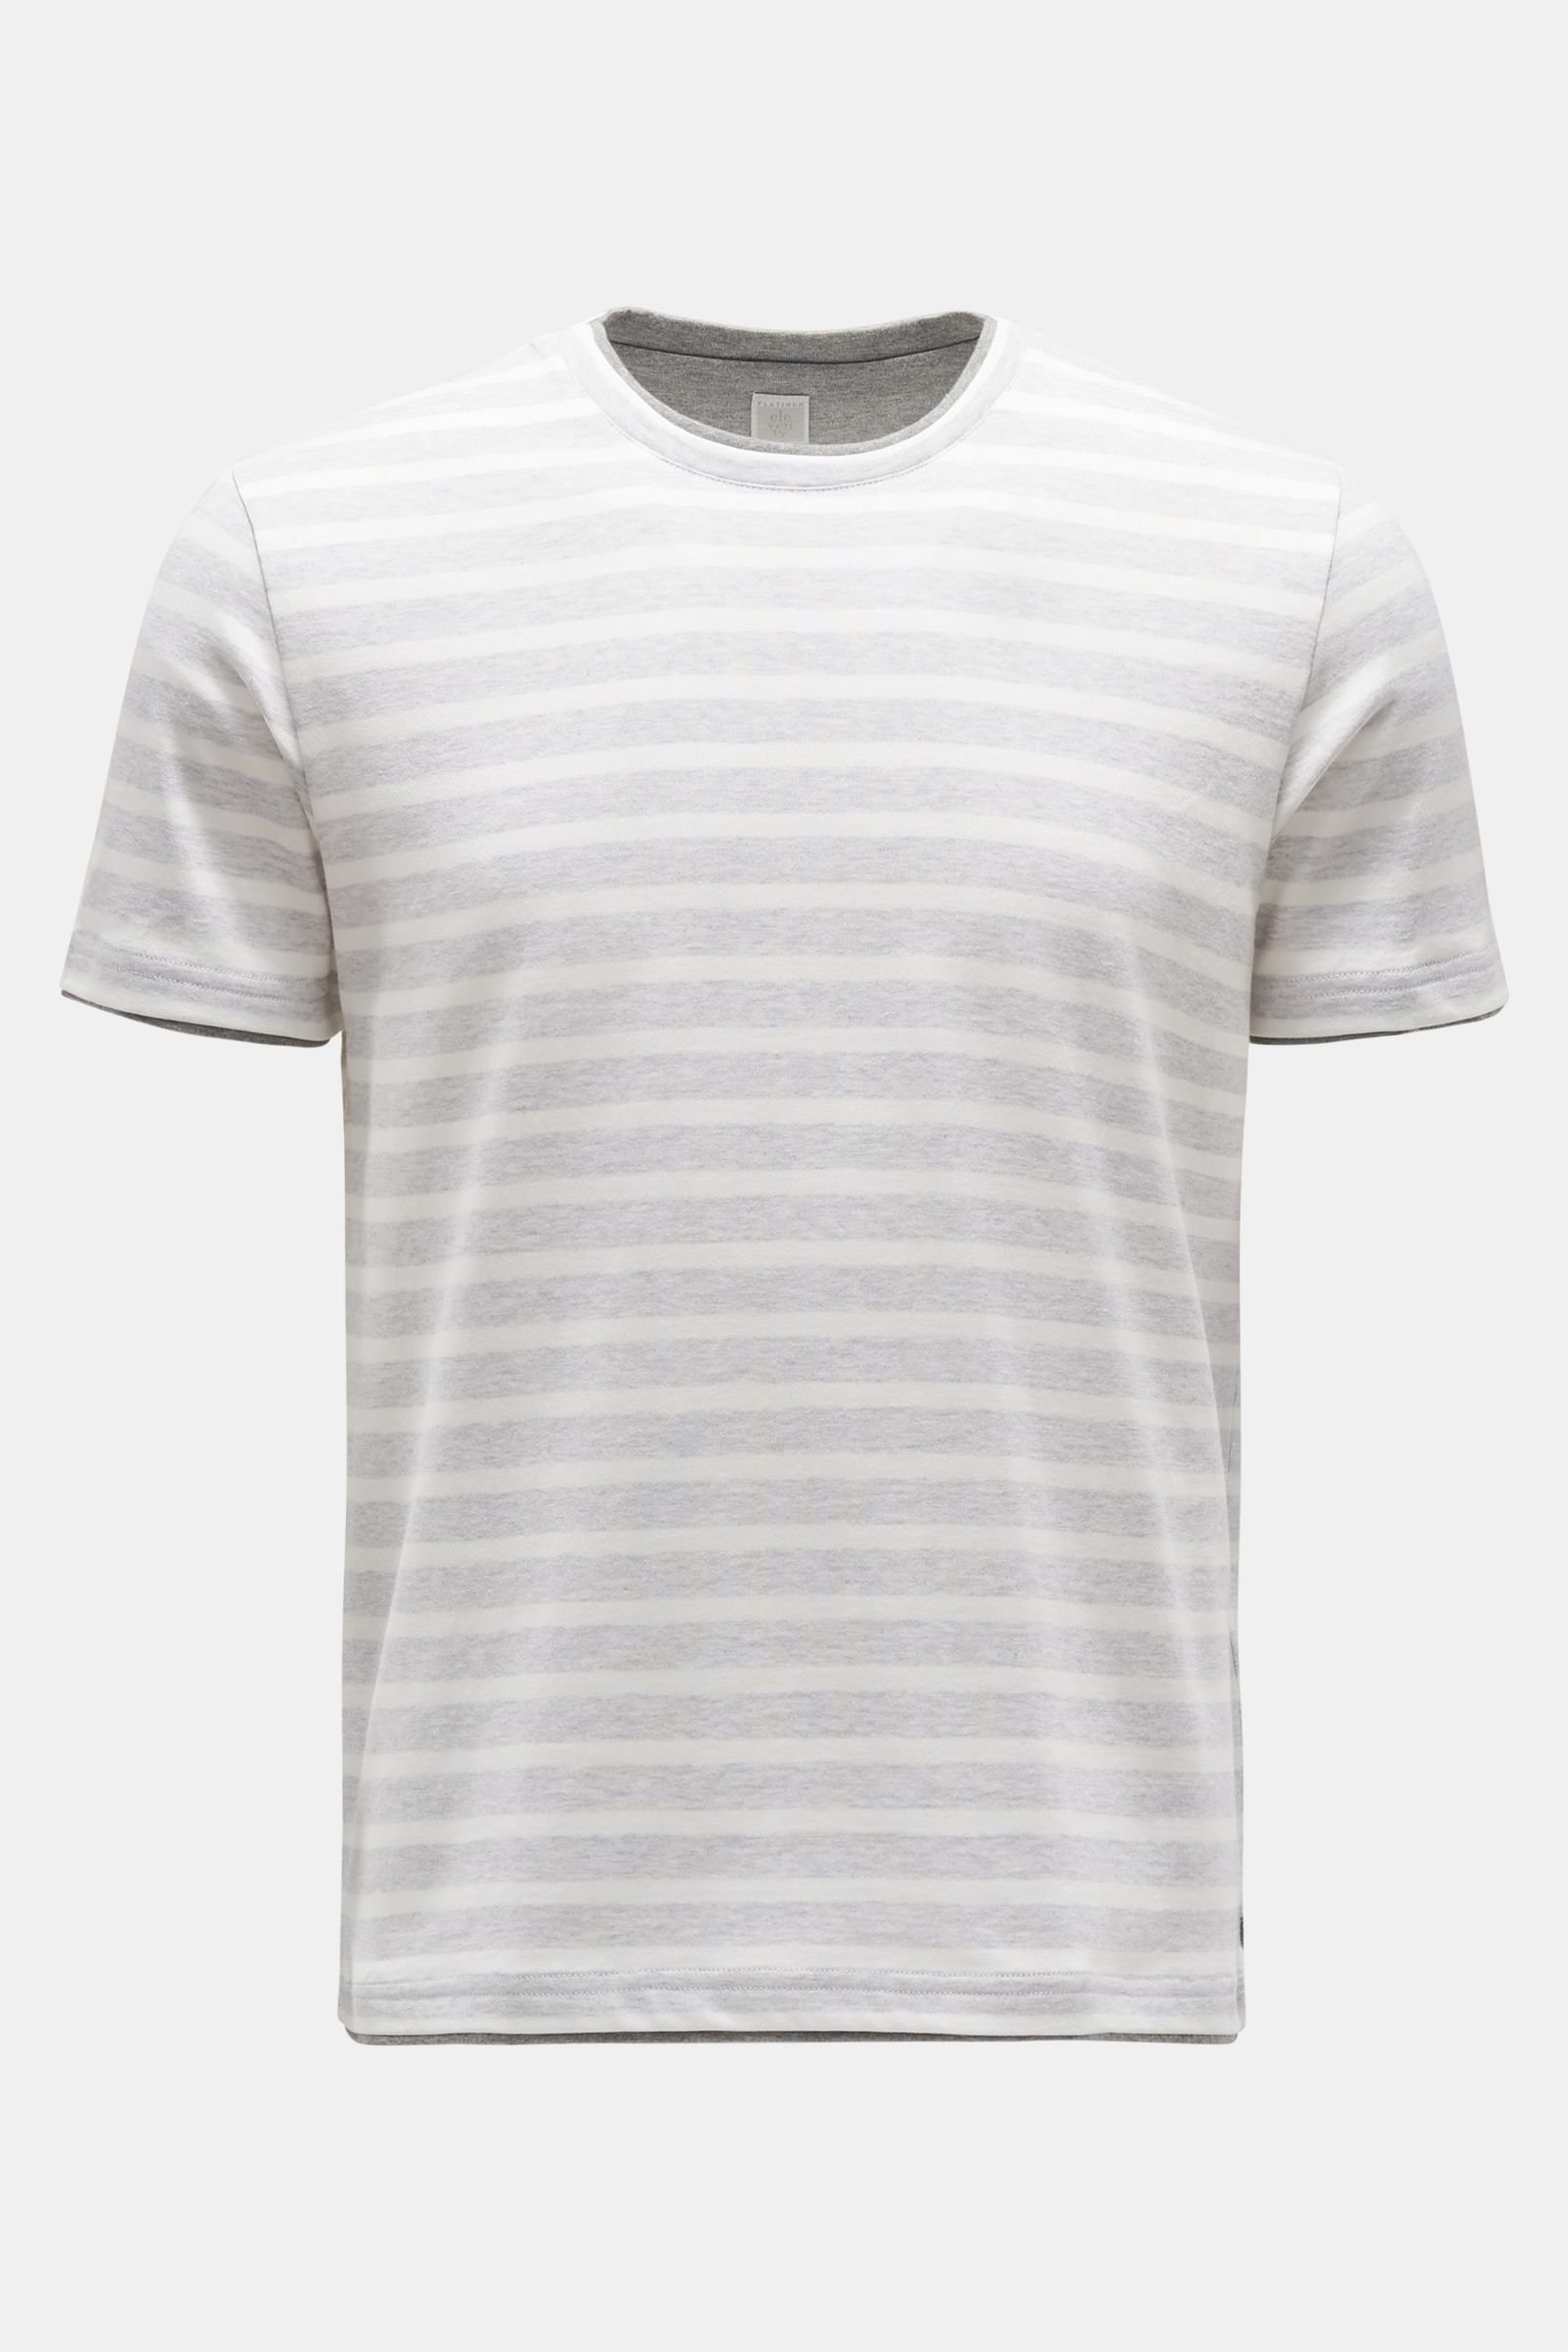 Crew neck T-shirt light grey/white striped